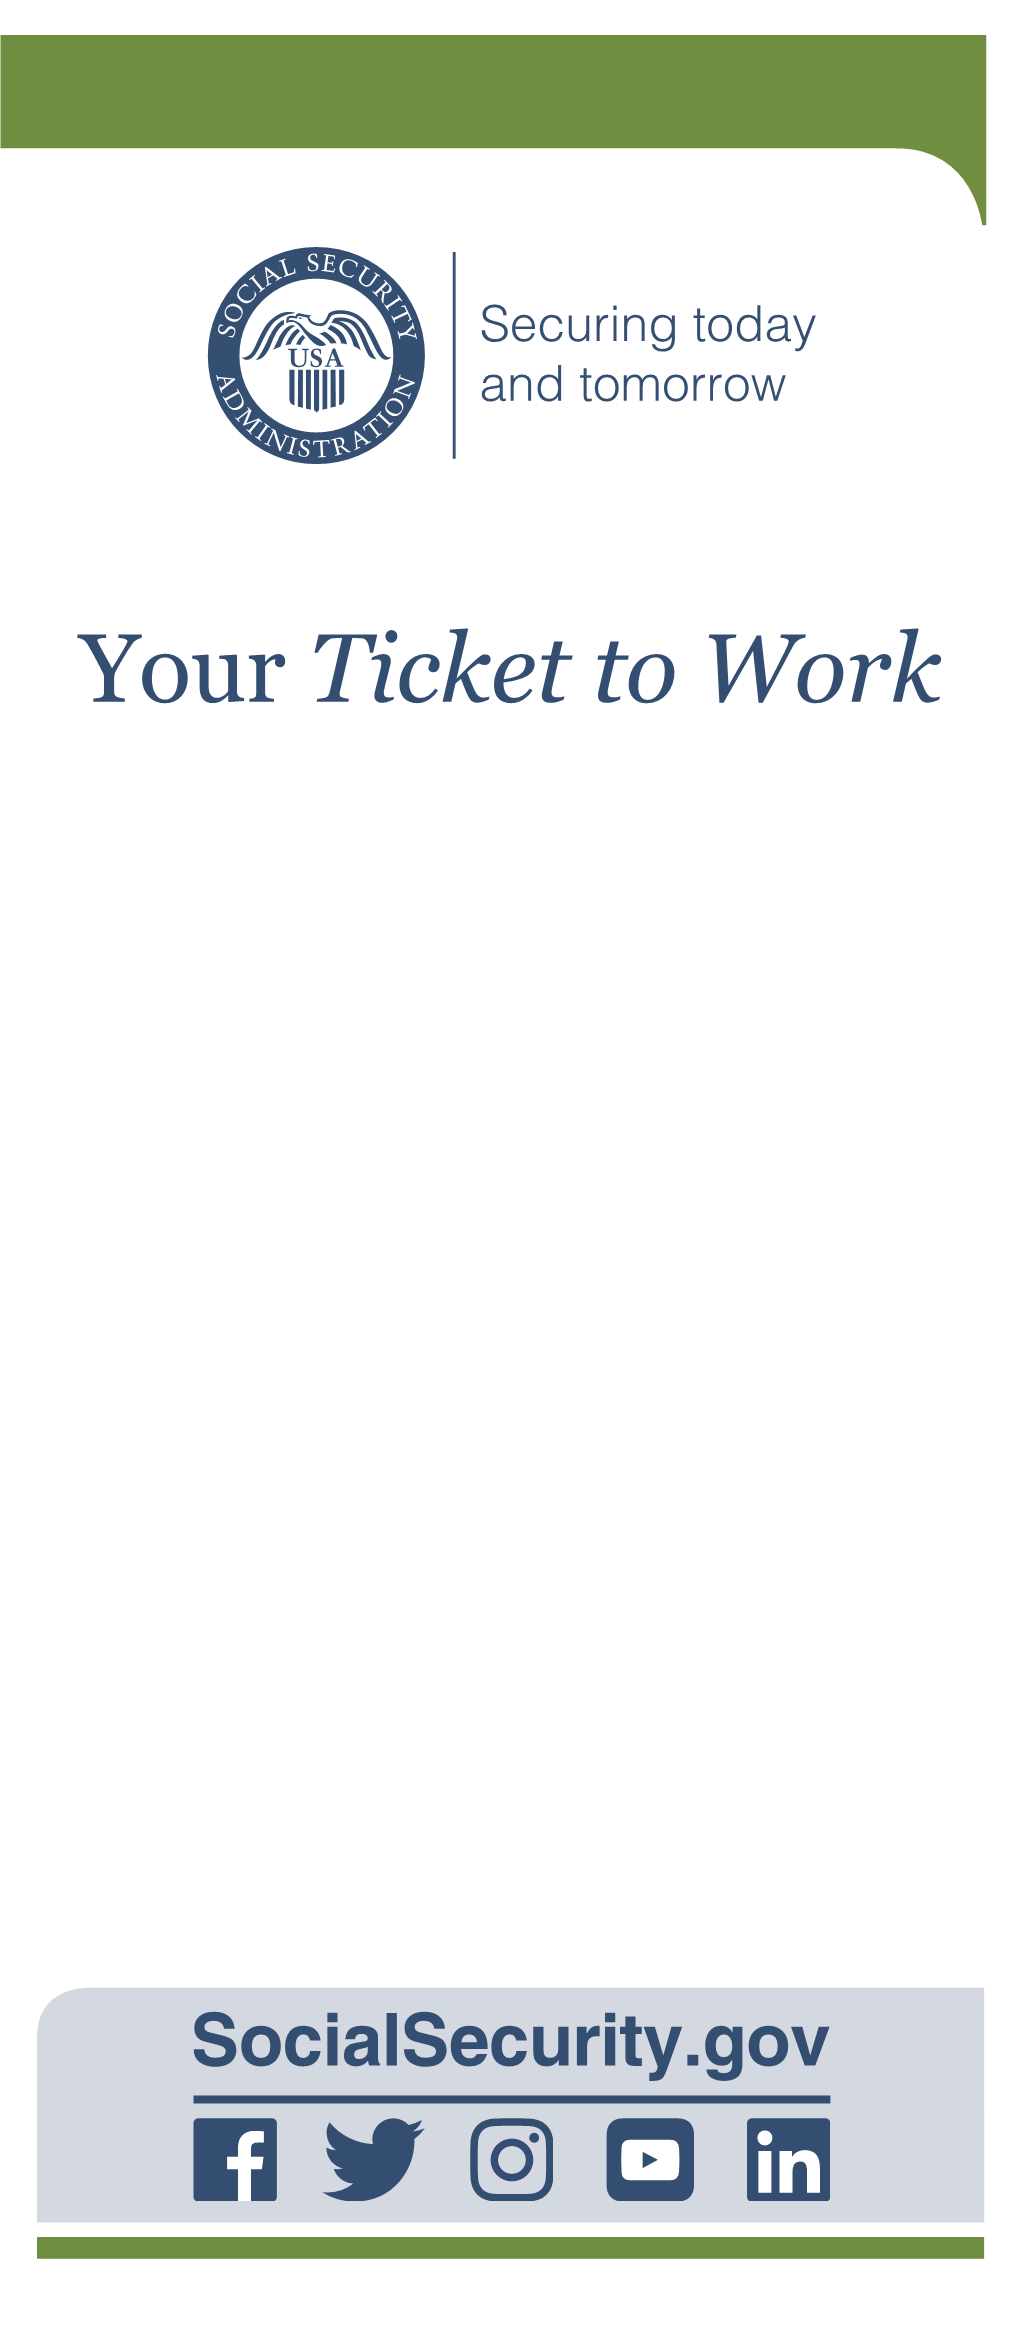 Your Ticket to Work Program